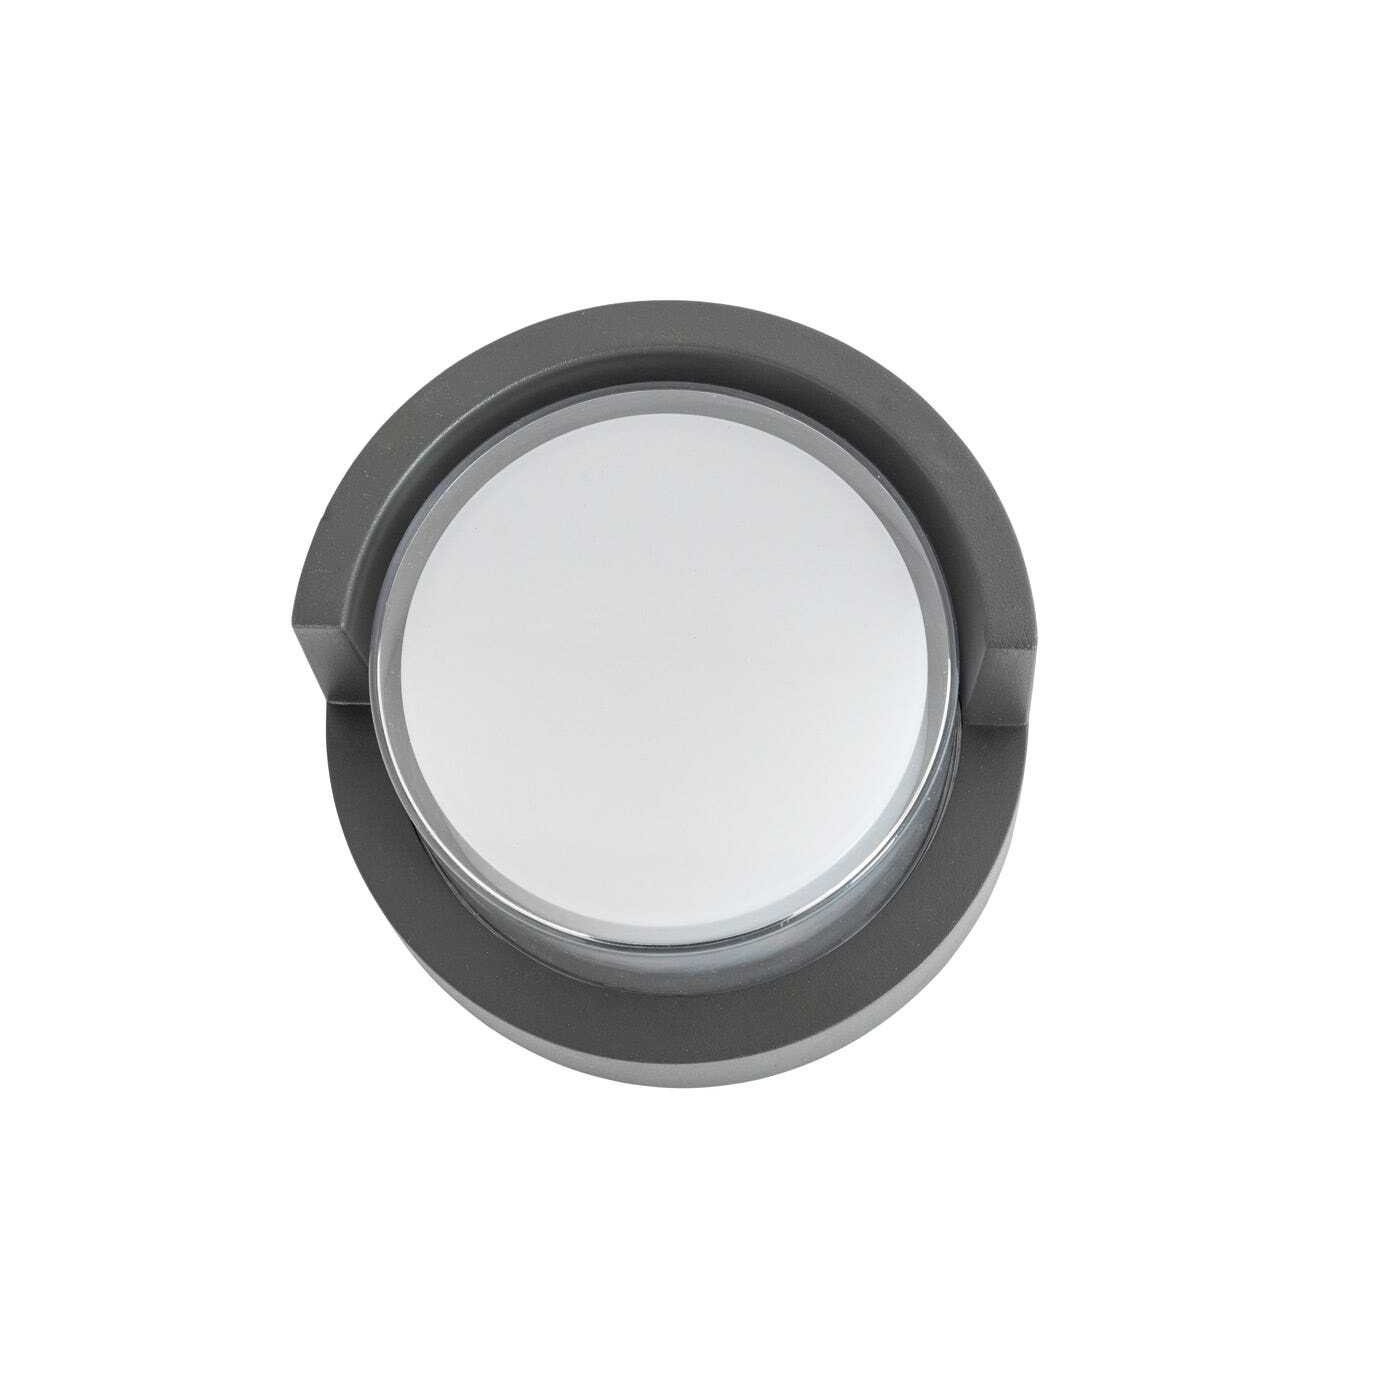 Heal's LED Outdoor or Bathroom Wall Light Shaded Top Dark Grey - image 1